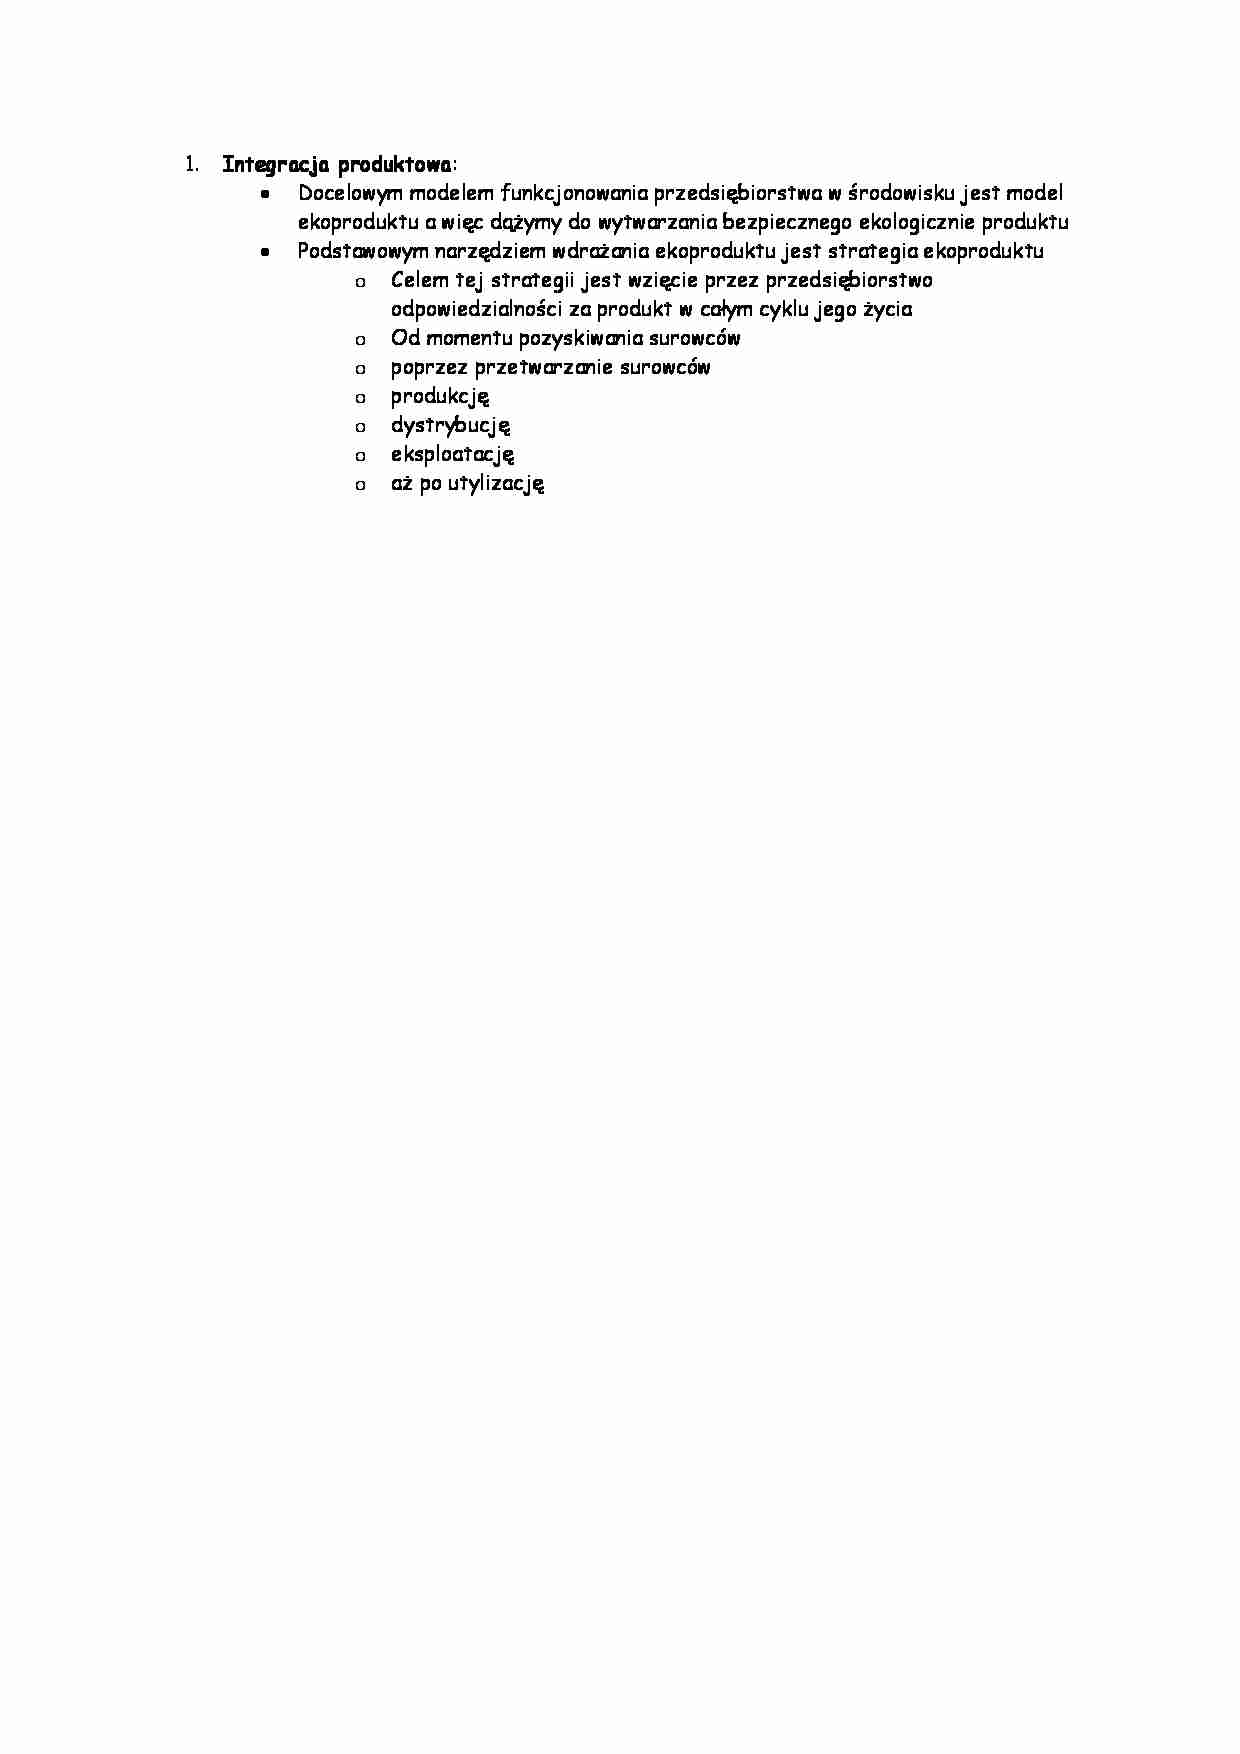 Ekologistyka - Integracja produktowa - strona 1